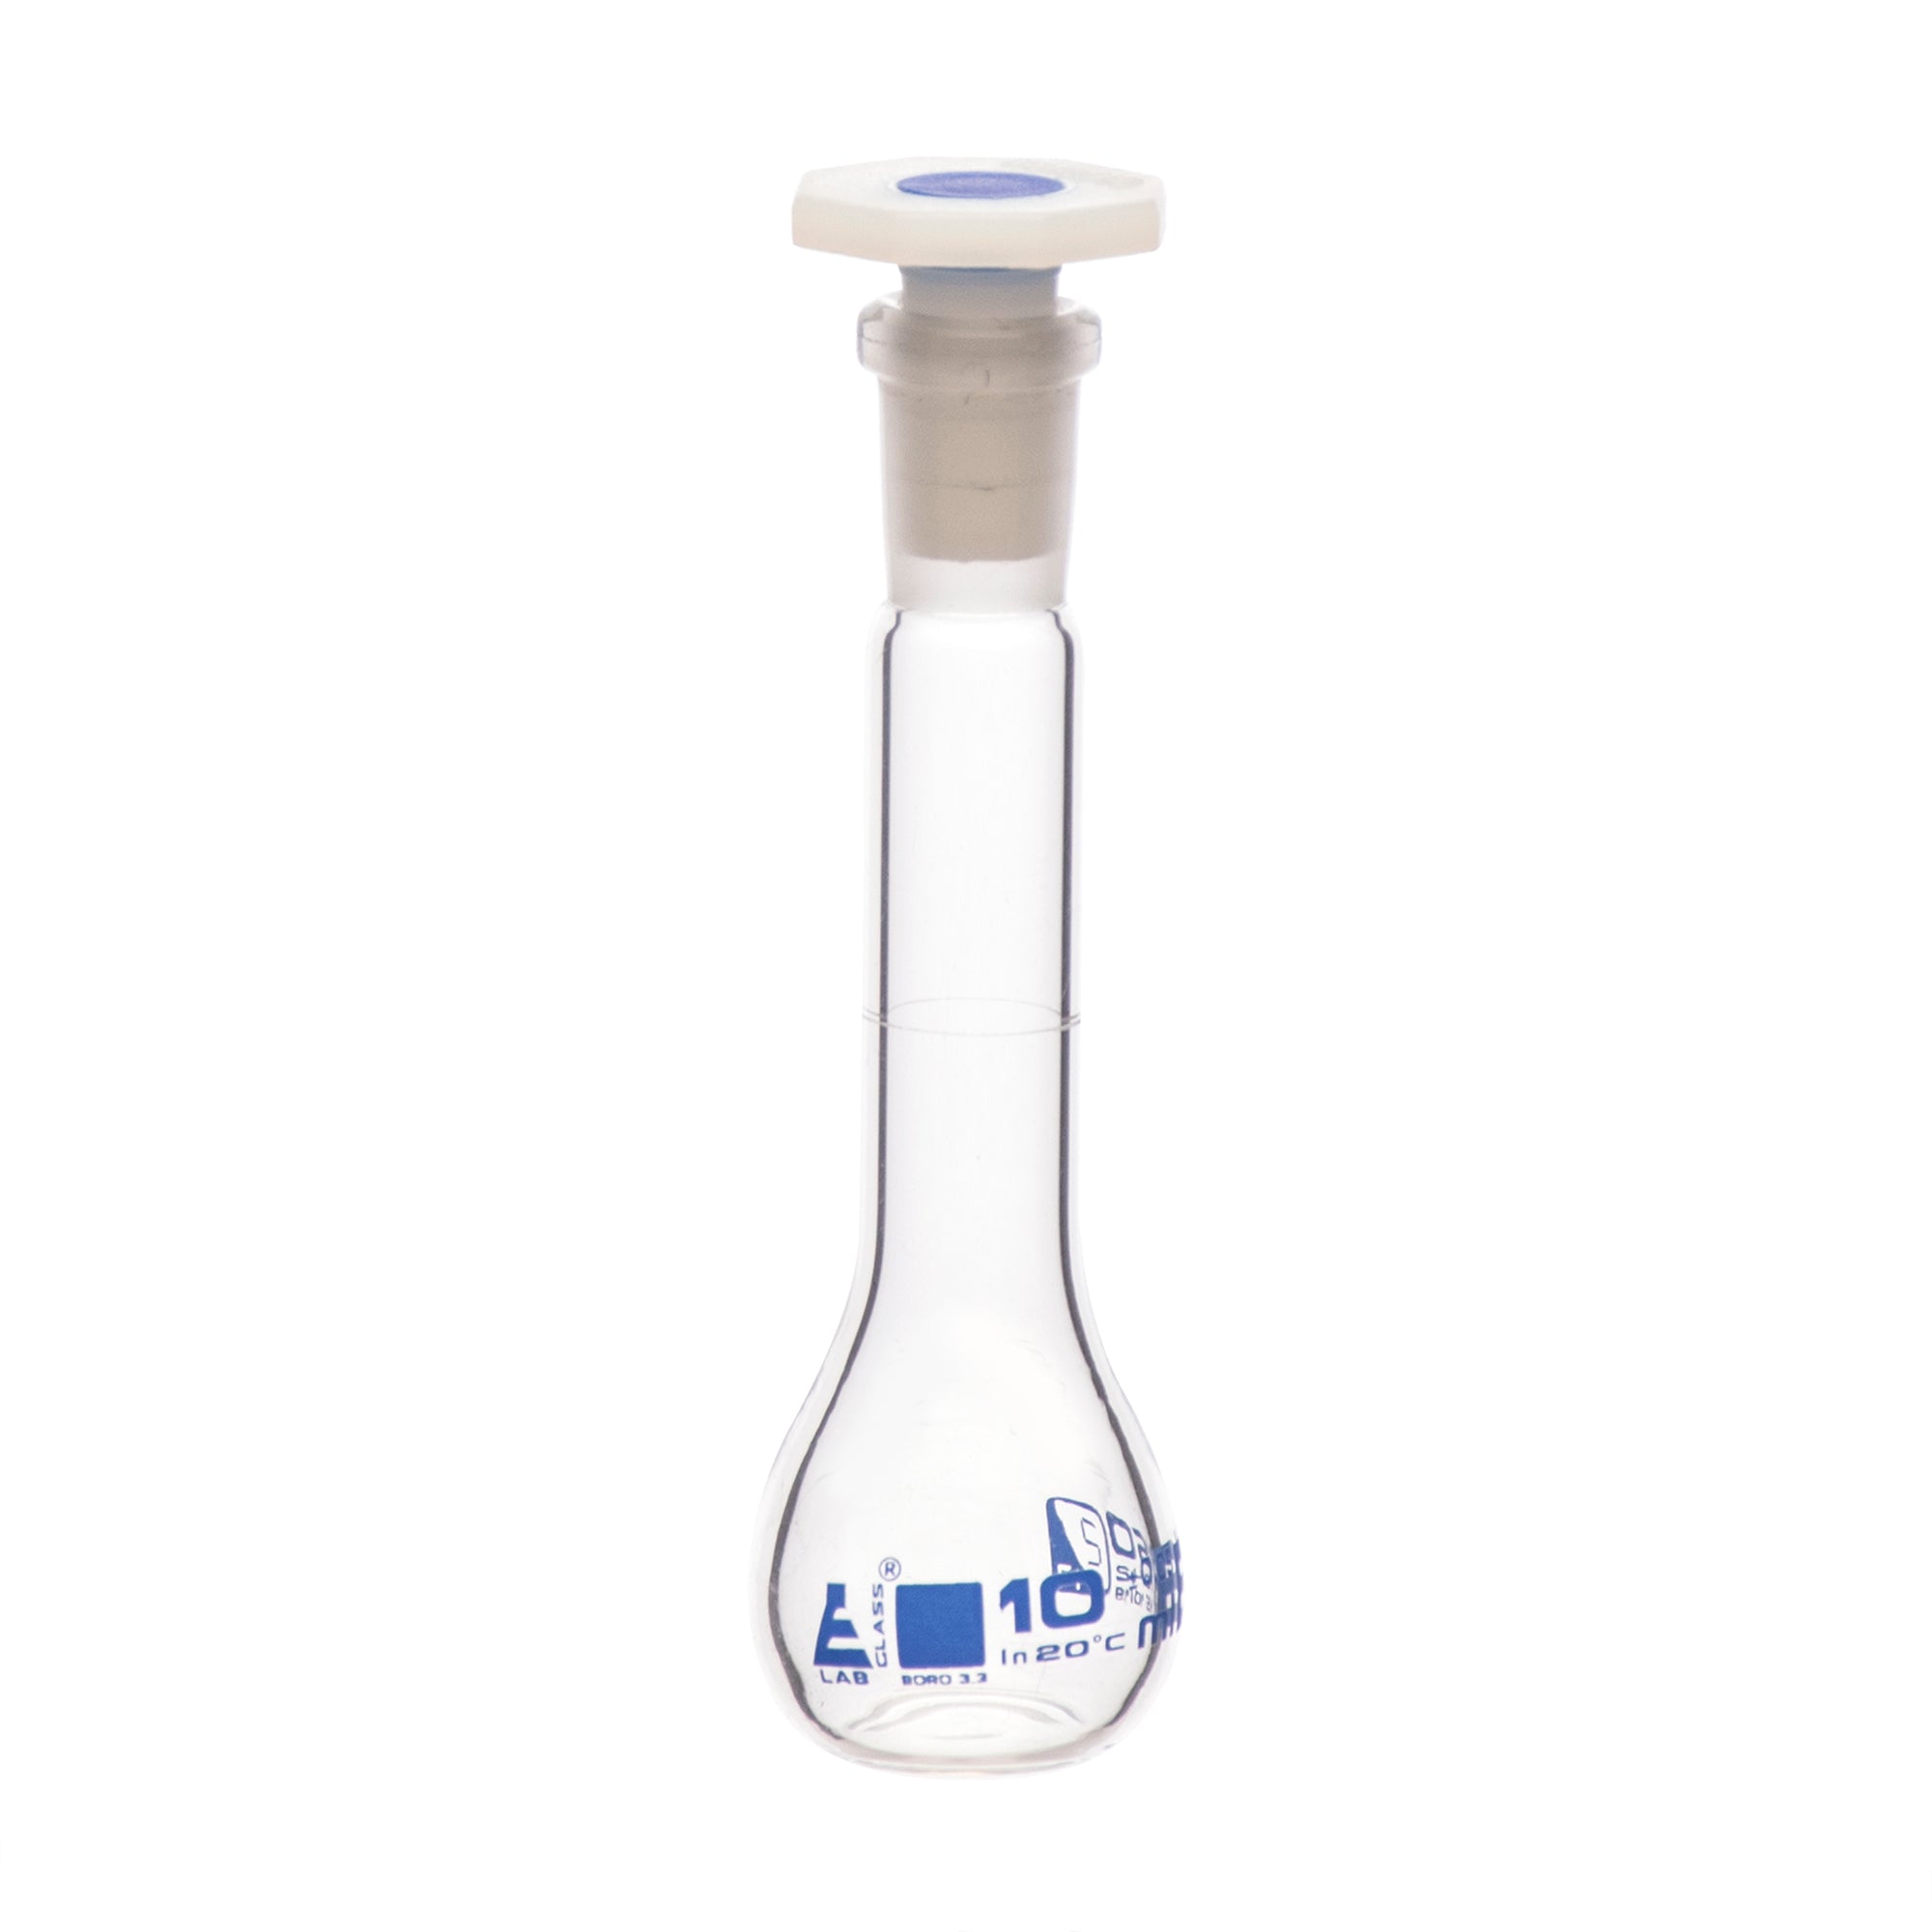 Borosilicate Glass Volumetric Flask with Polyethylene Stopper, 10ml, Class B, Blue Print, Autoclavable